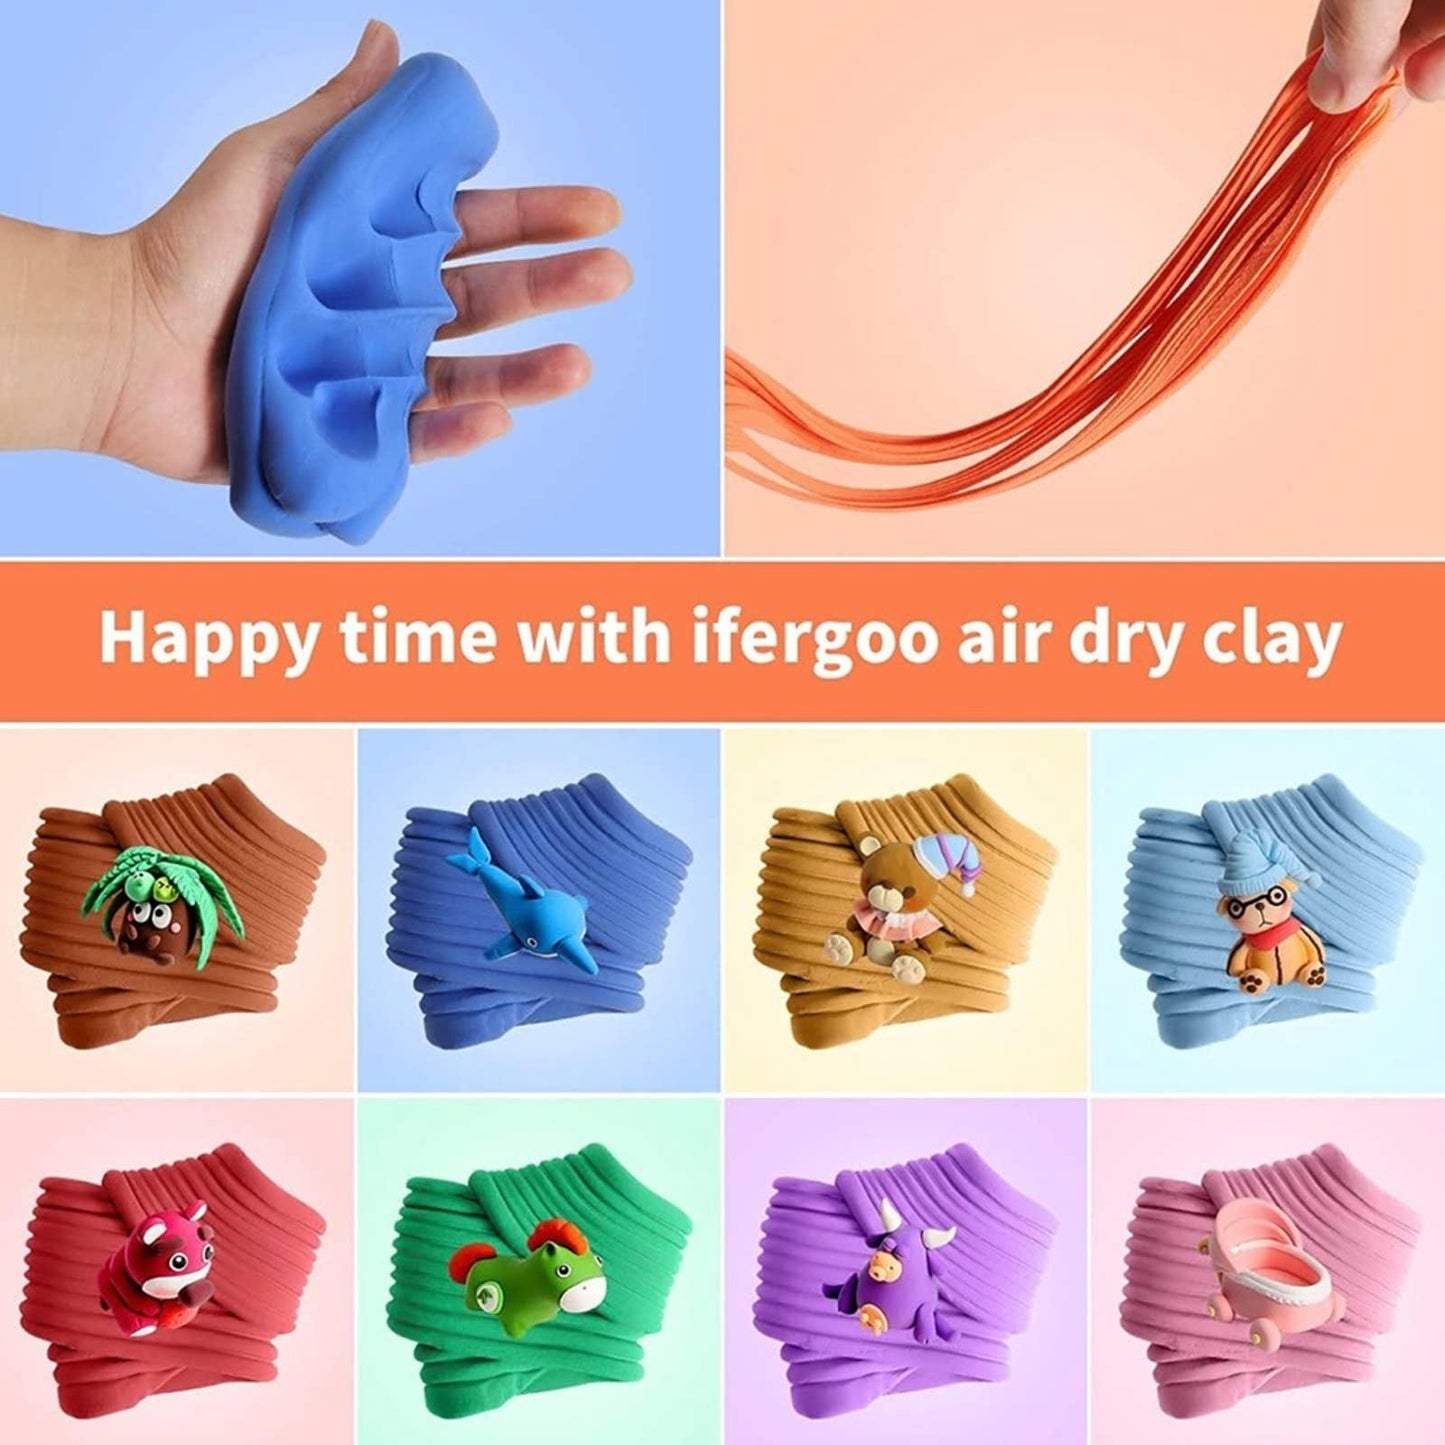 ifergoo Modeling Clay Kit - 24 Colors Magic Air Dry Ultra Light Clay, Safe